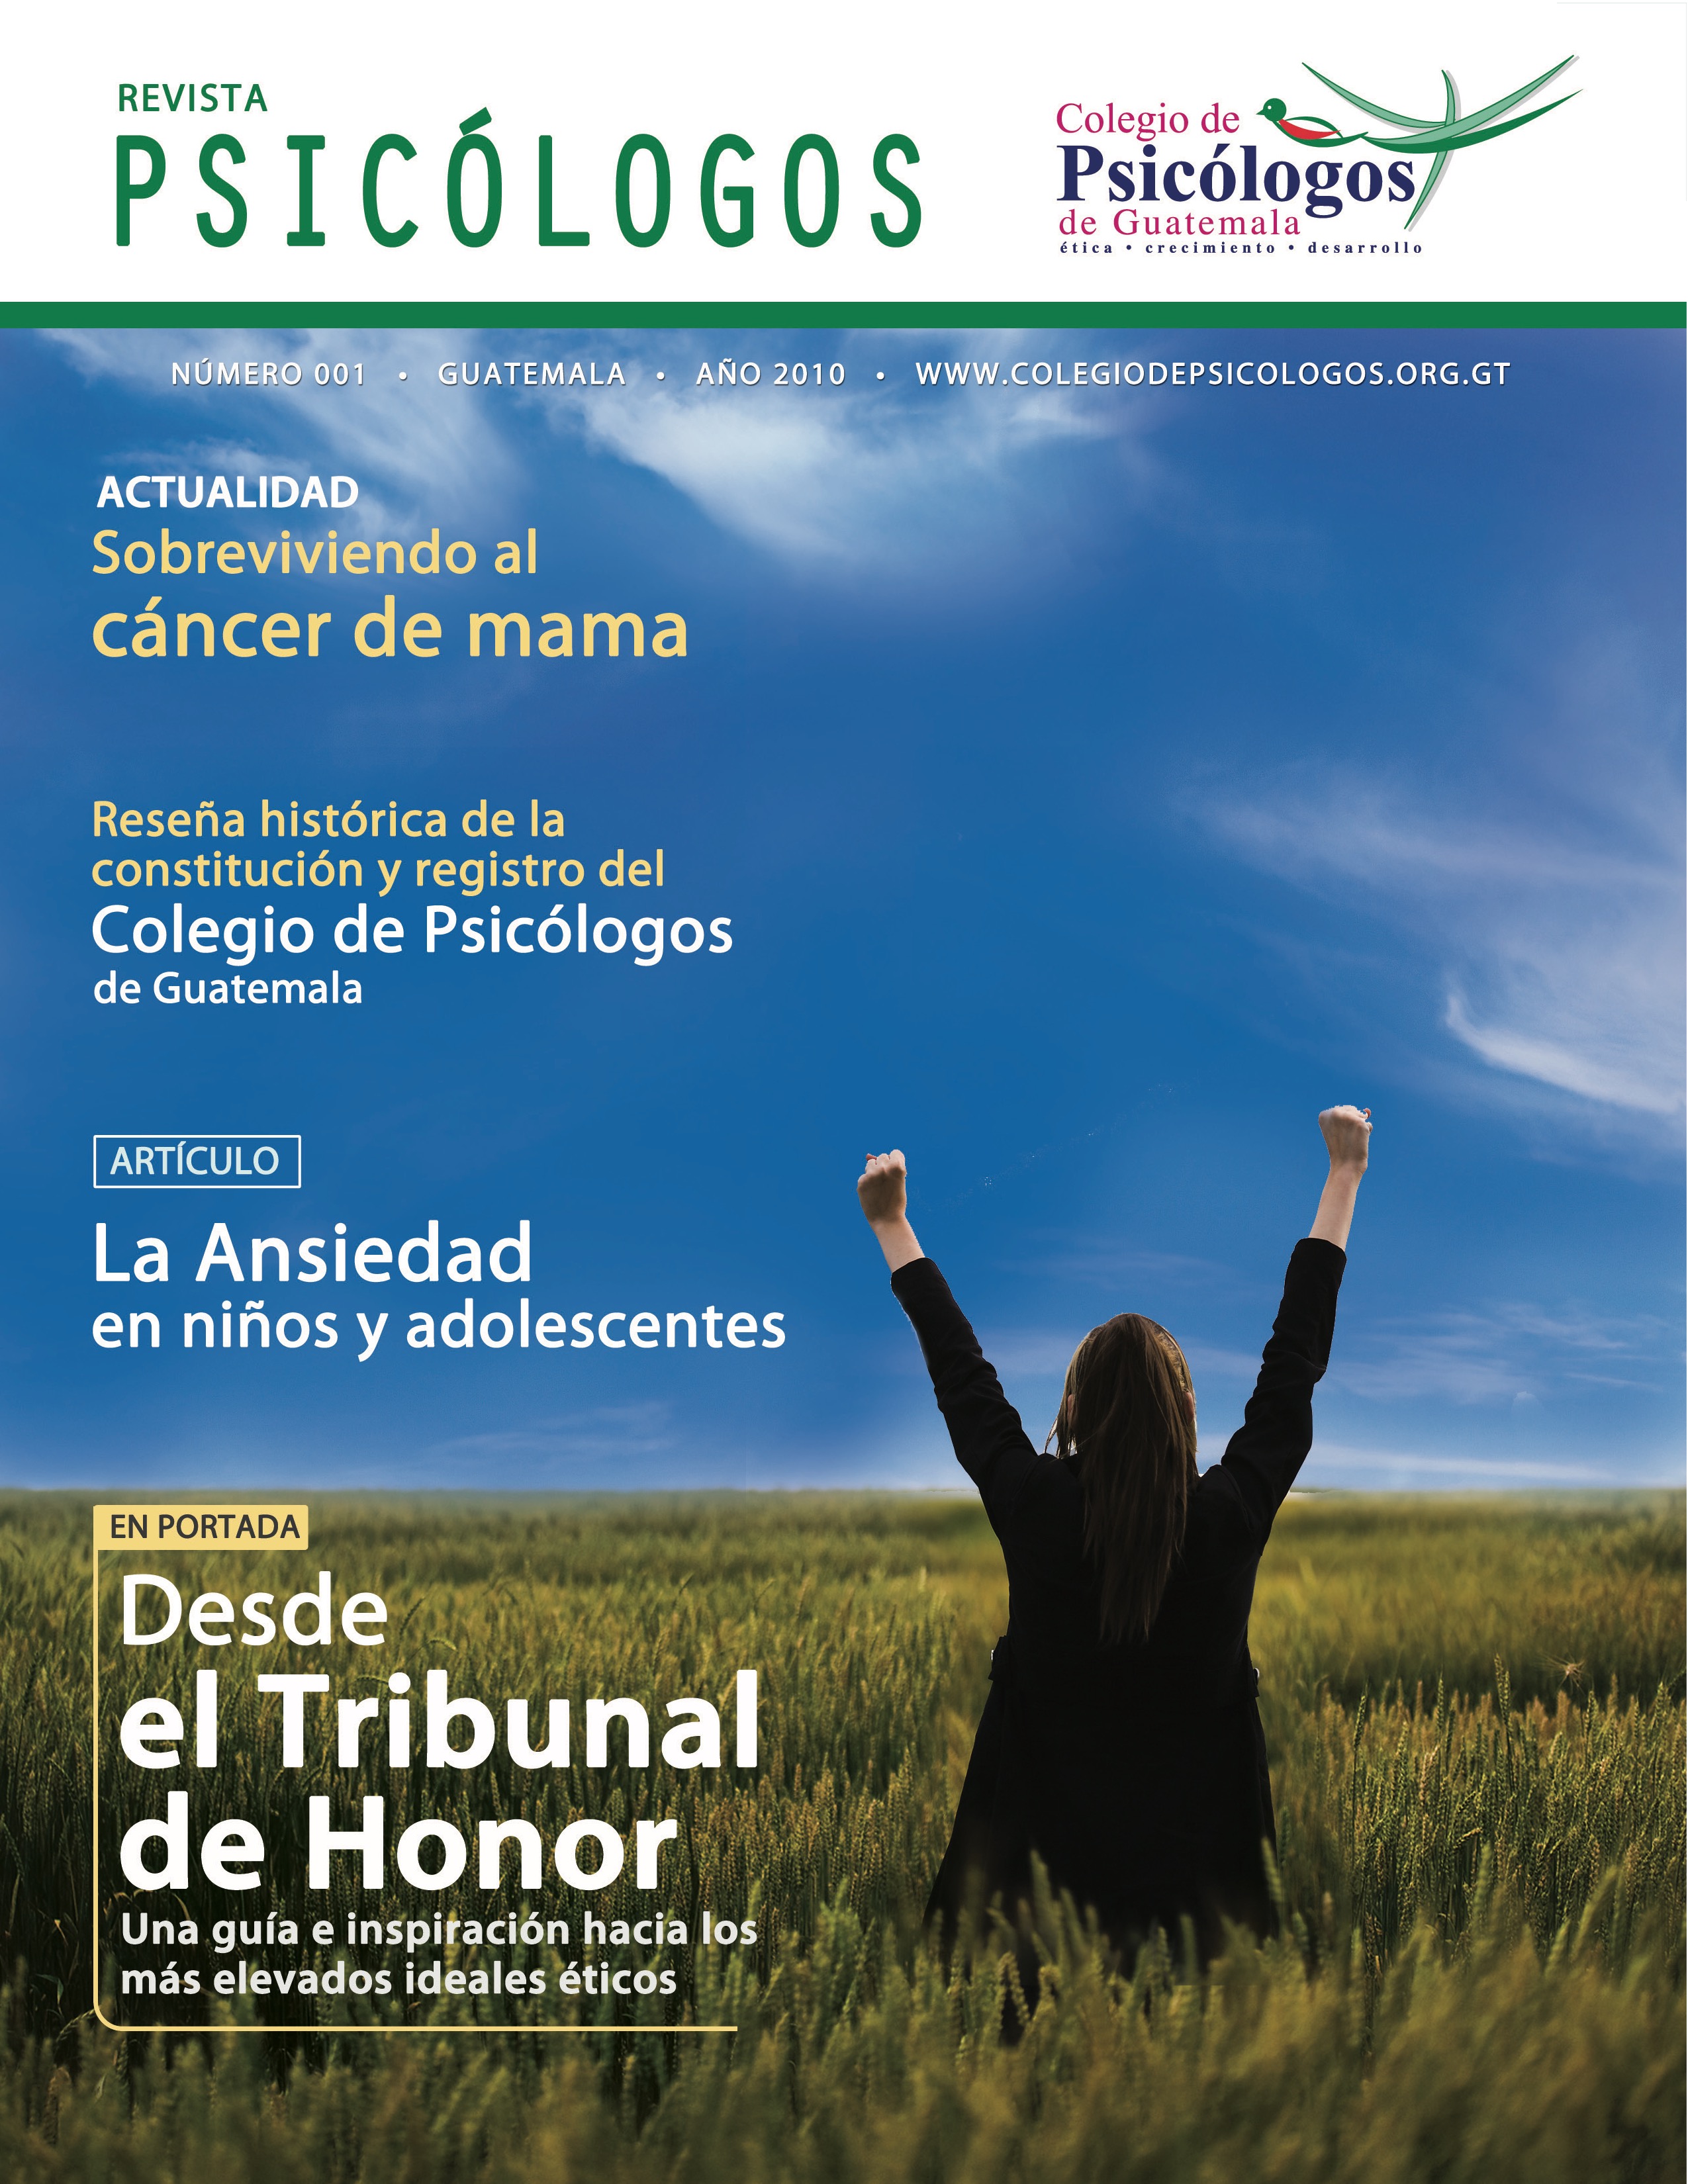 					Ver Vol. 1 Núm. 1 (2010): Revista Psicólogos No. 1
				